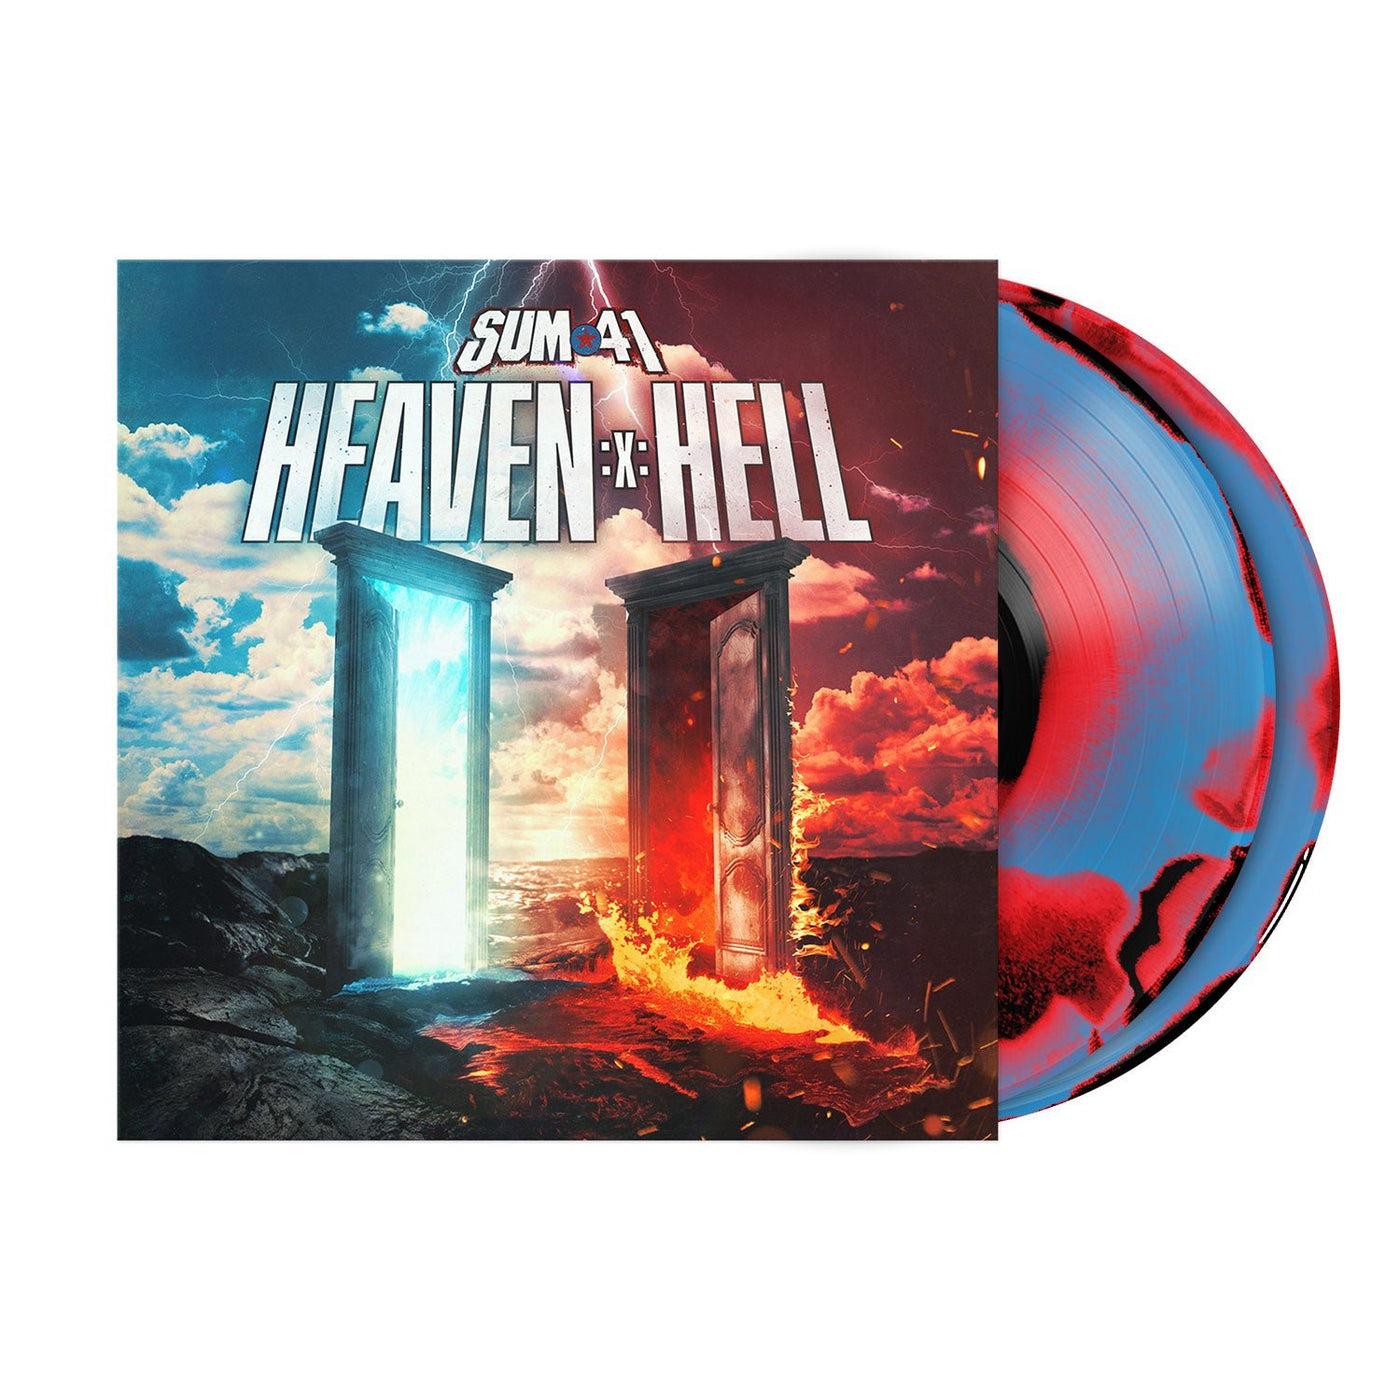 Heaven :X: Hell US Exclusive 3-Color Smush Double Vinyl LP